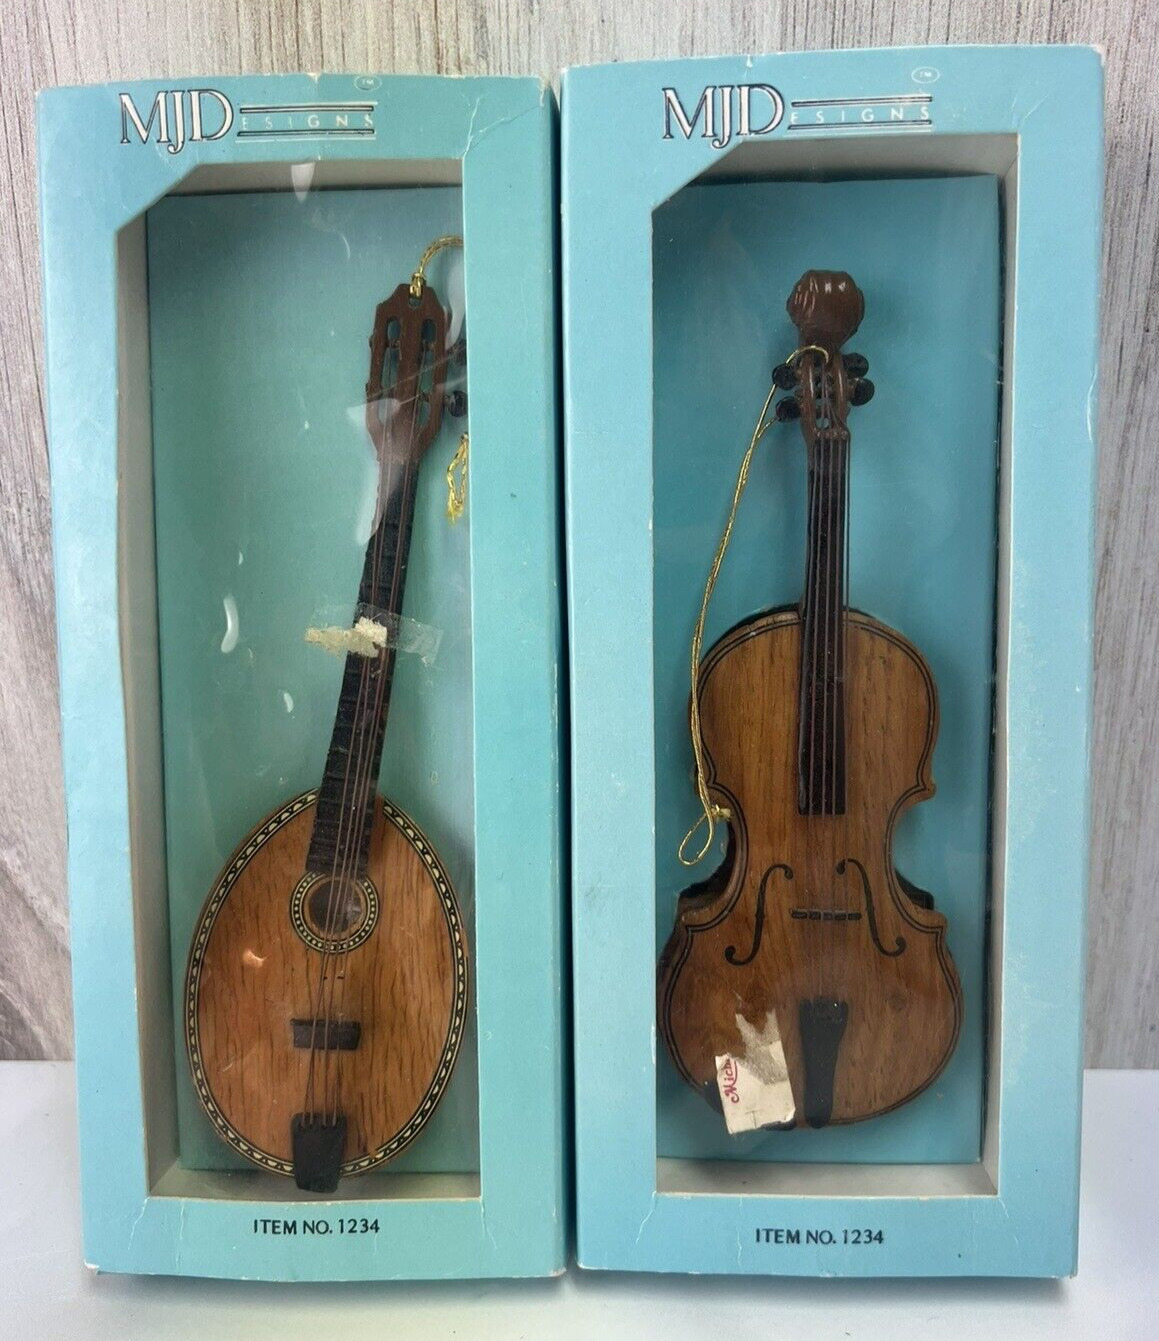 MJ Designs Vintage Detailed Wood Violin & Mandolin Christmas Ornaments Set of 2